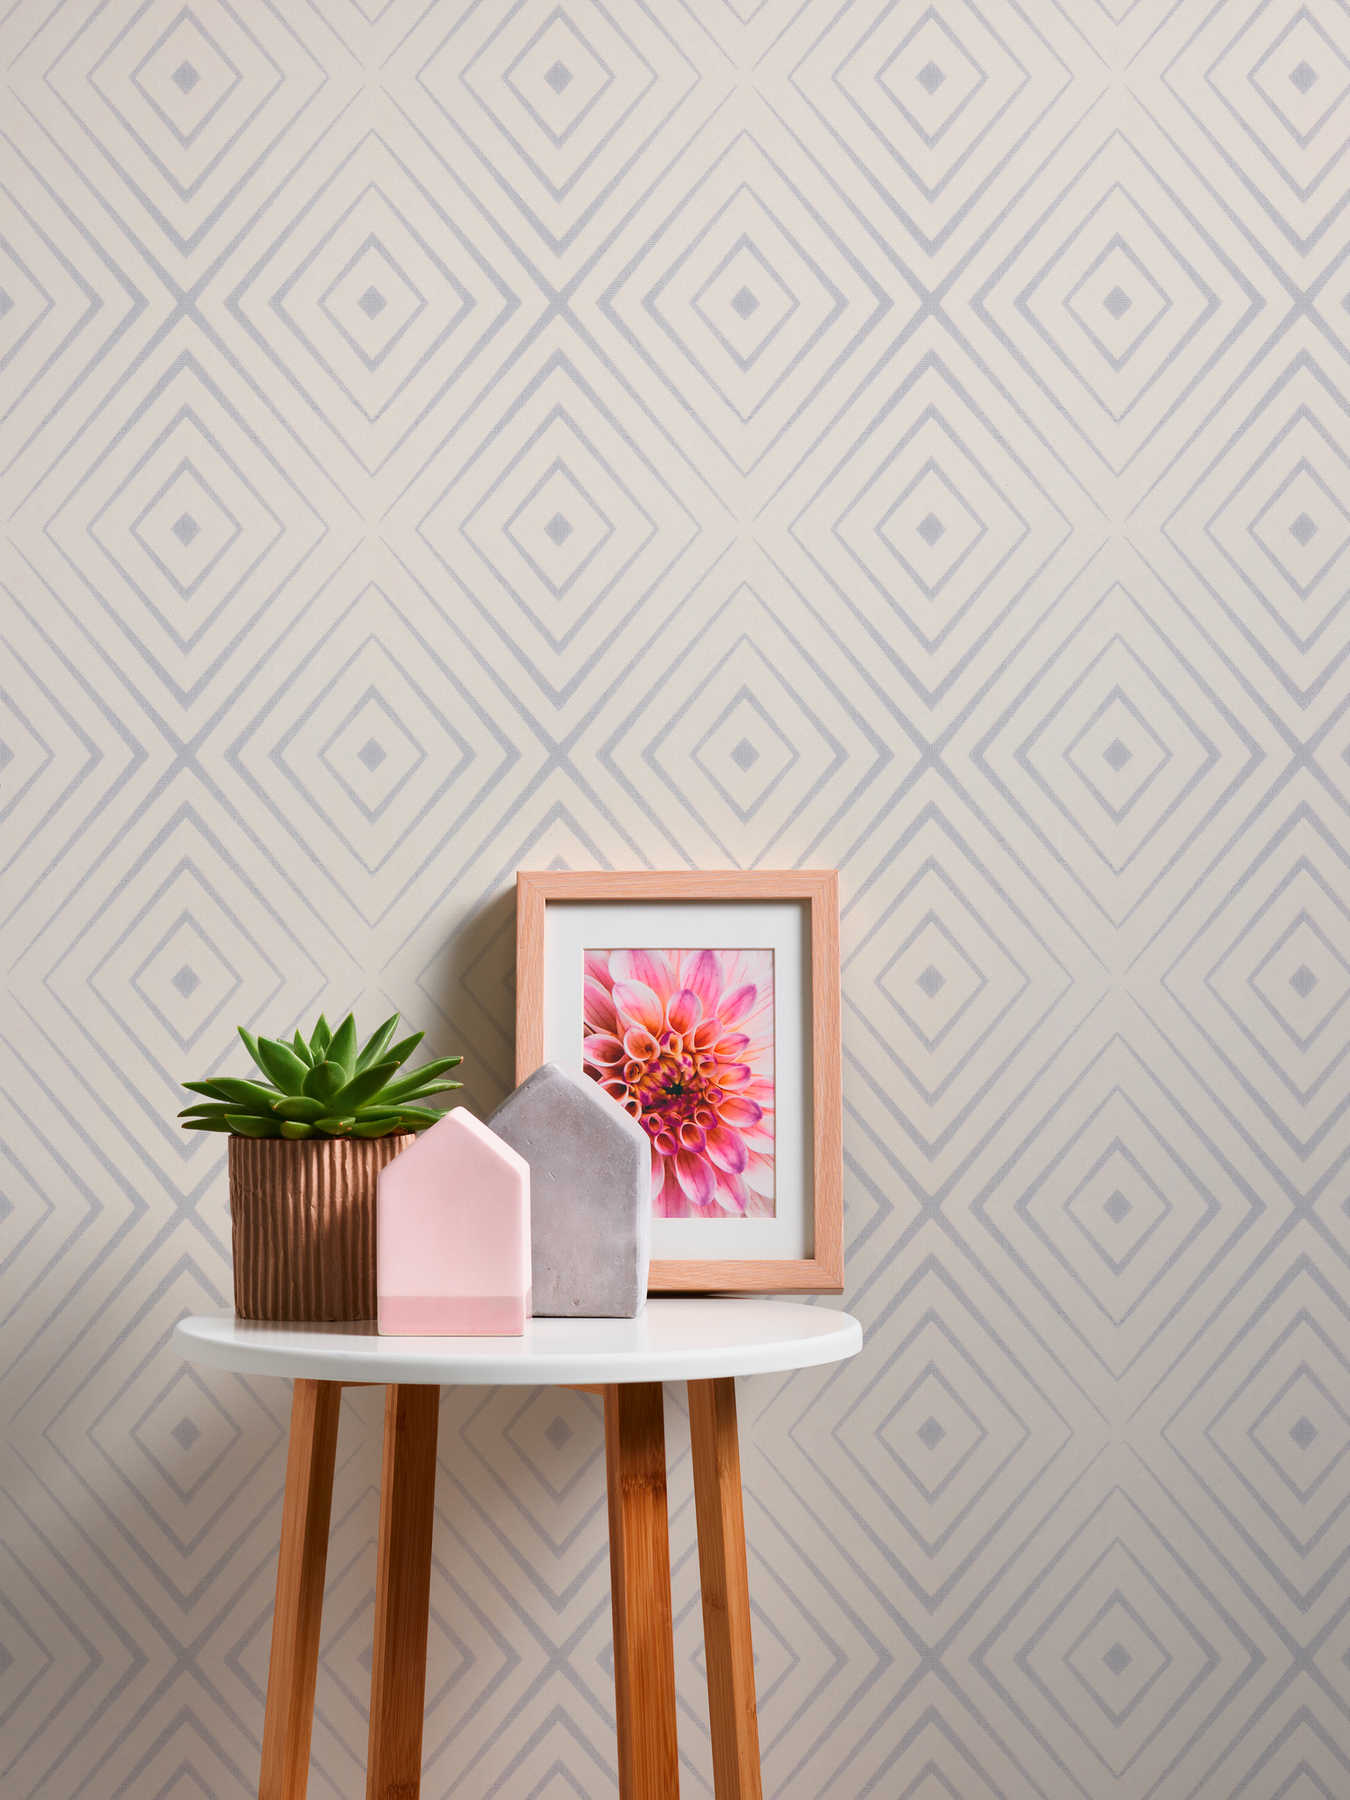             Non-woven wallpaper with diamond pattern & metallic effect - pink, grey
        